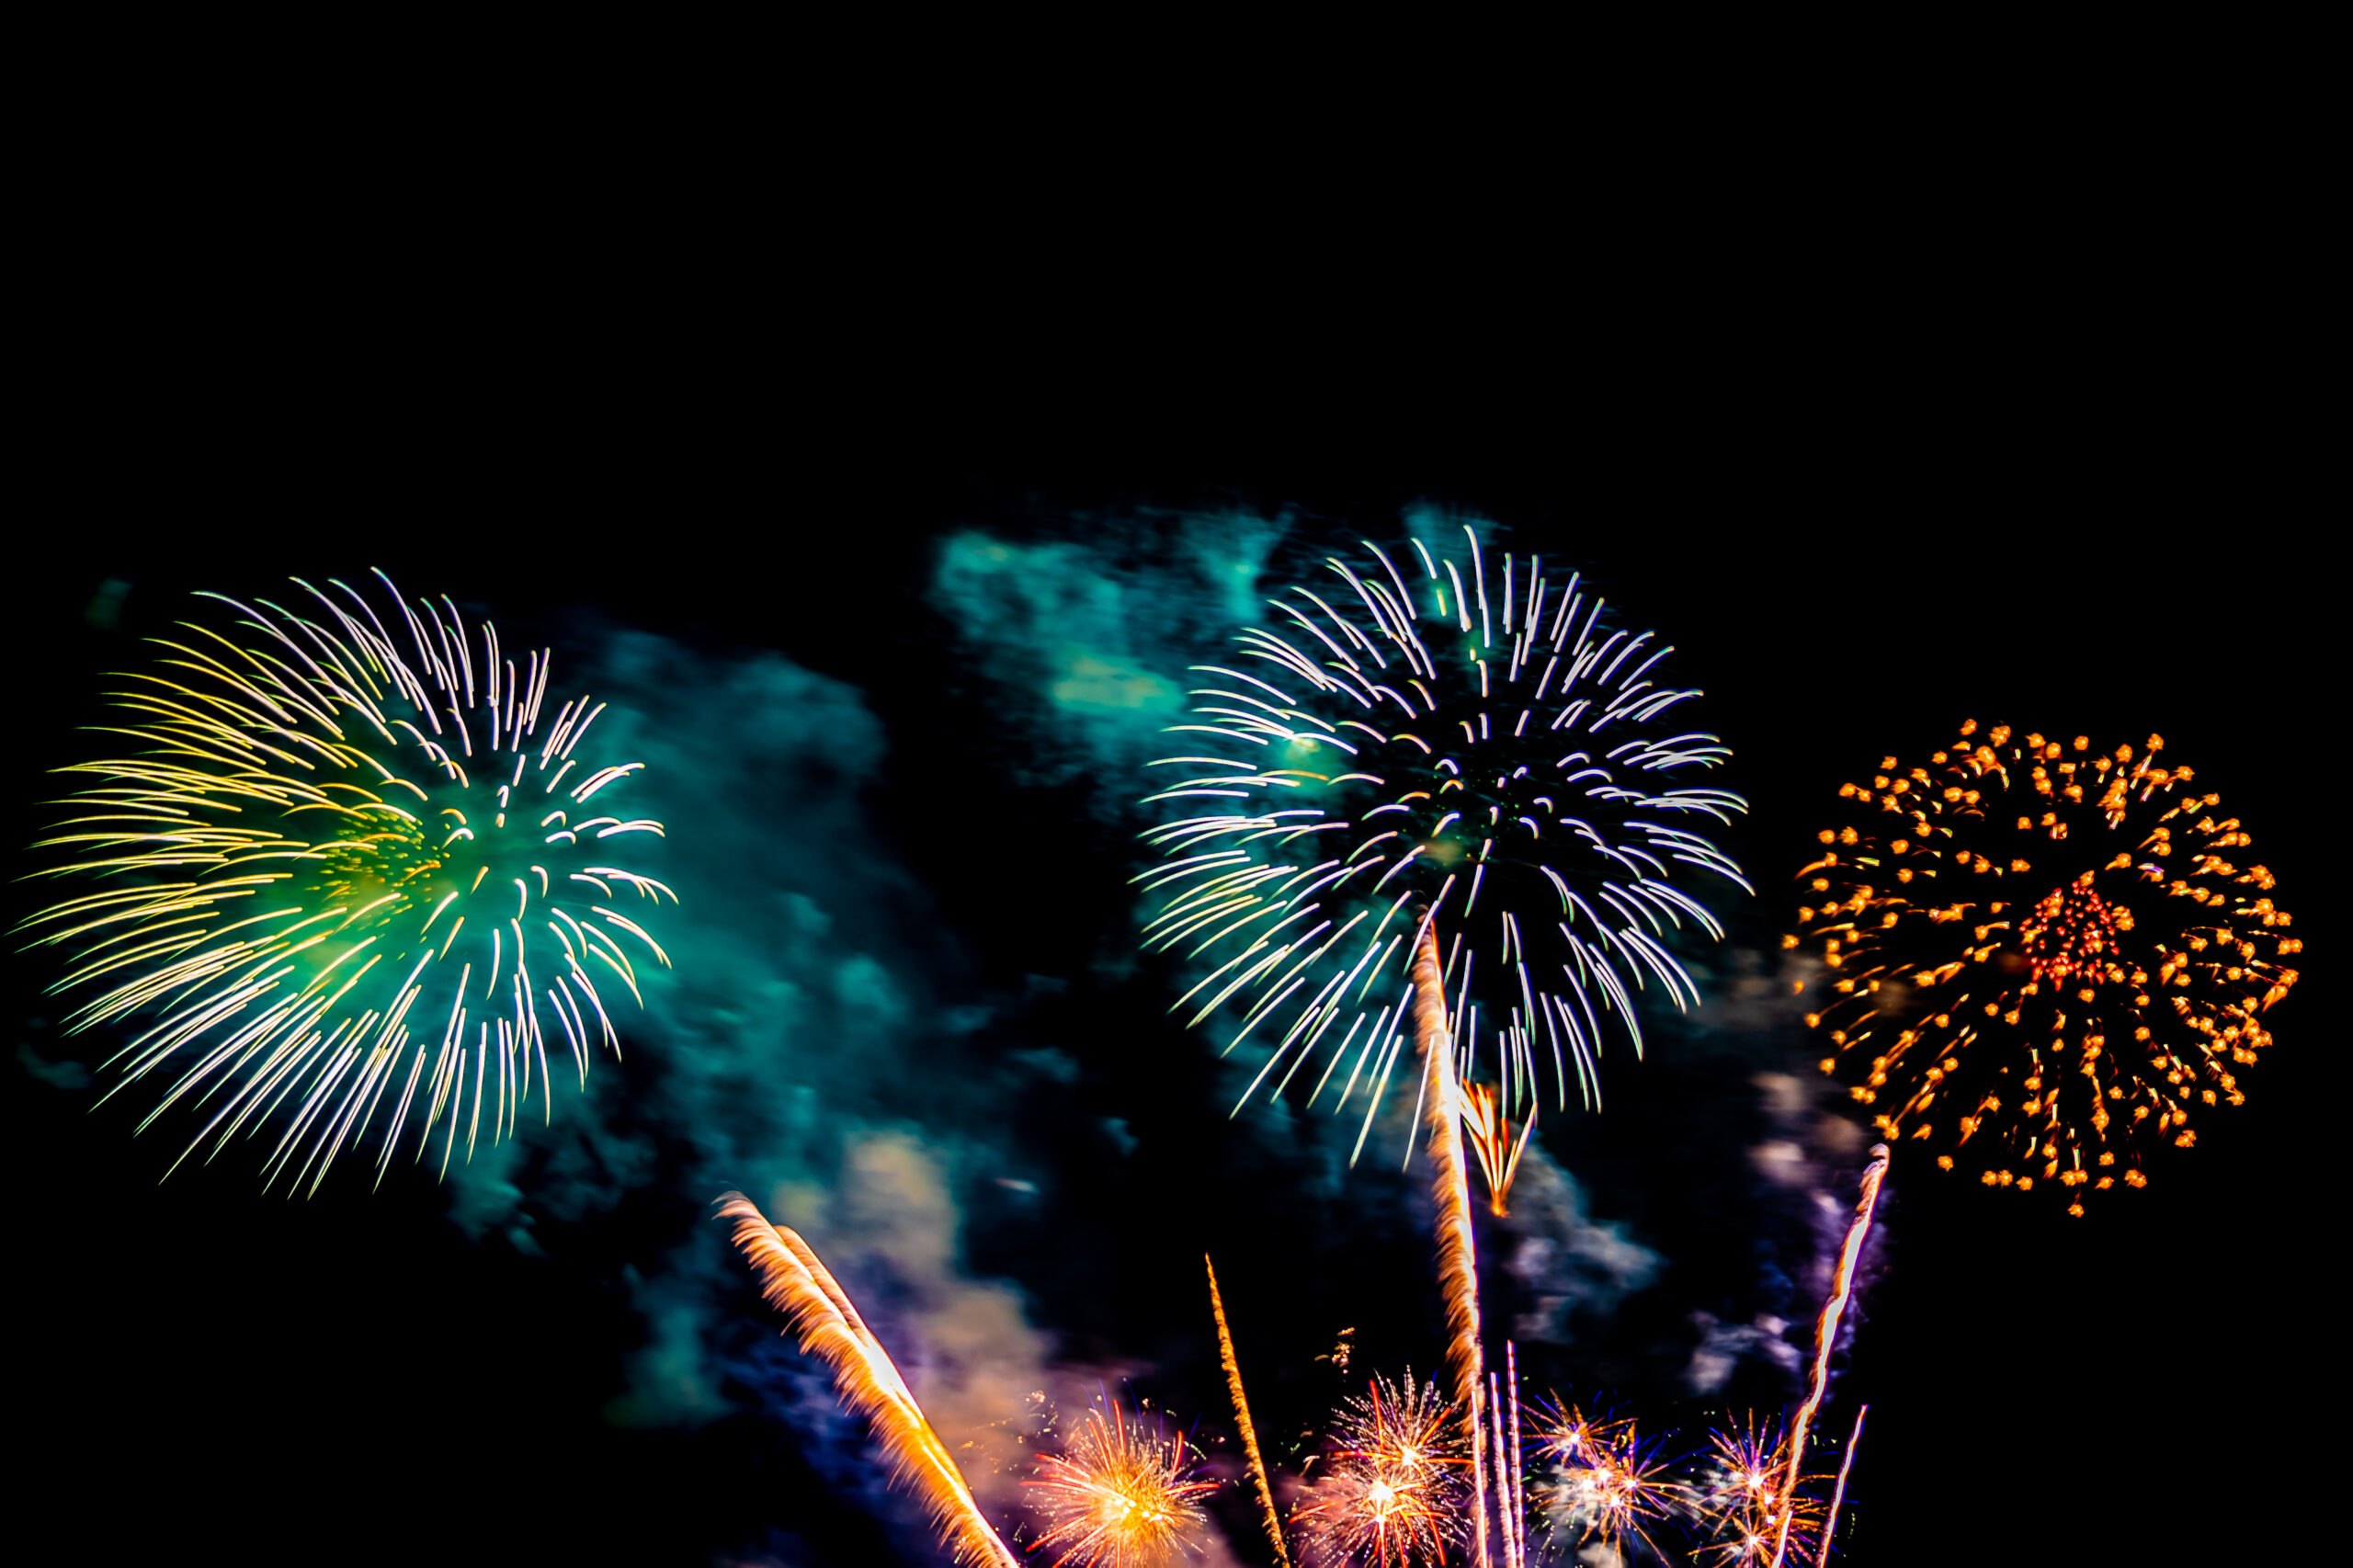 Nolensville-Star-Spangled-Celebration-Fireworks - Beautiful colorful firework display at night for celebrate